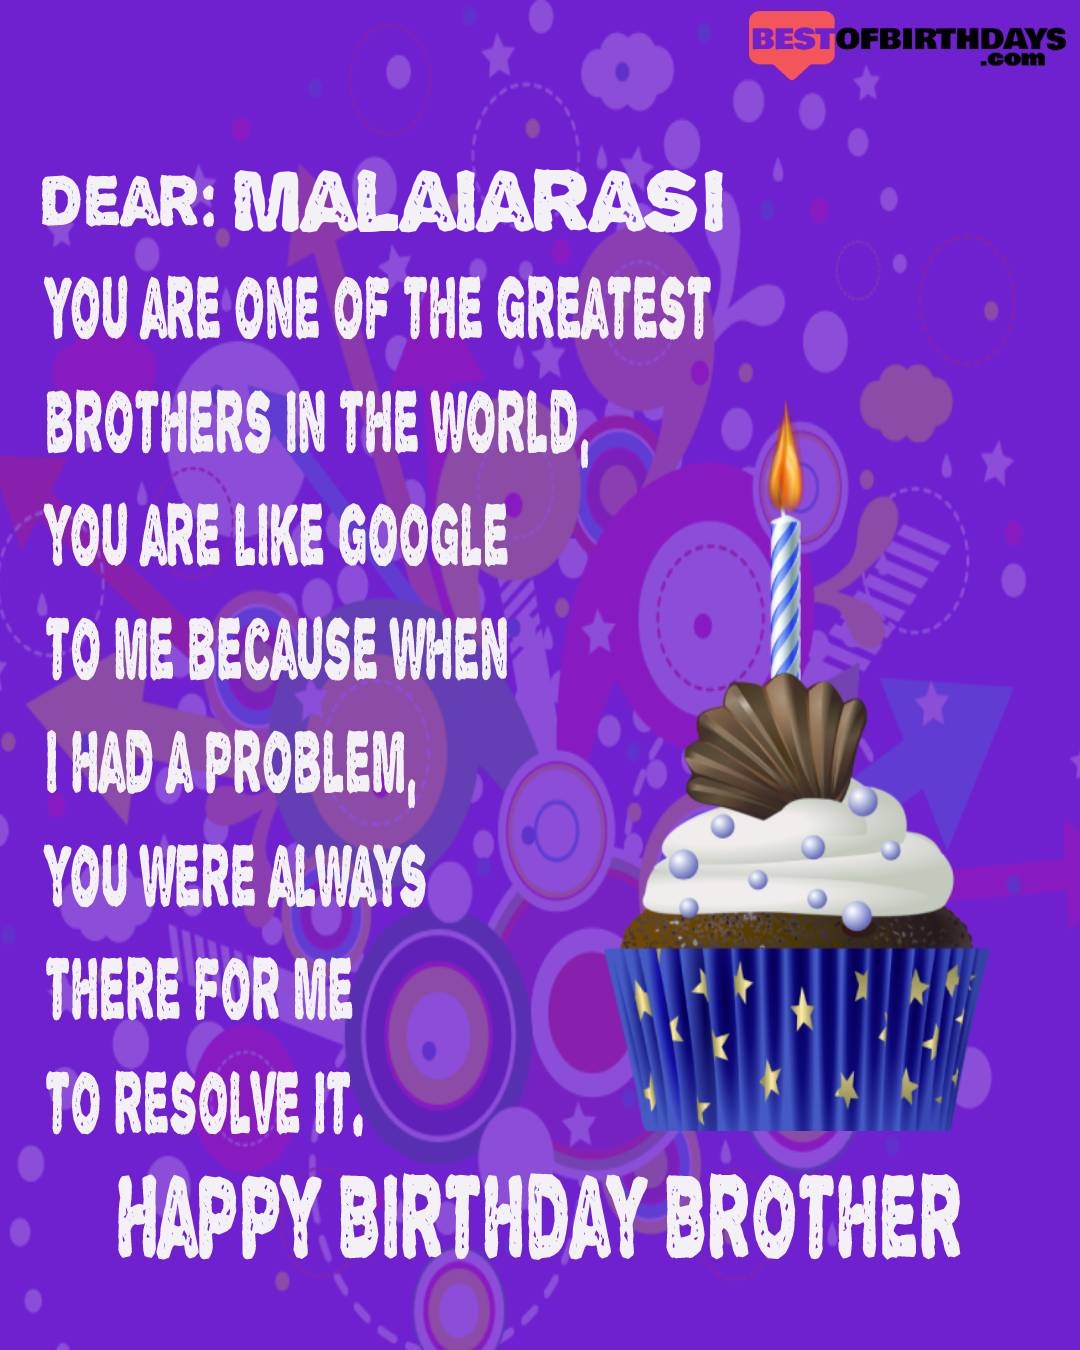 Happy birthday malaiarasi bhai brother bro